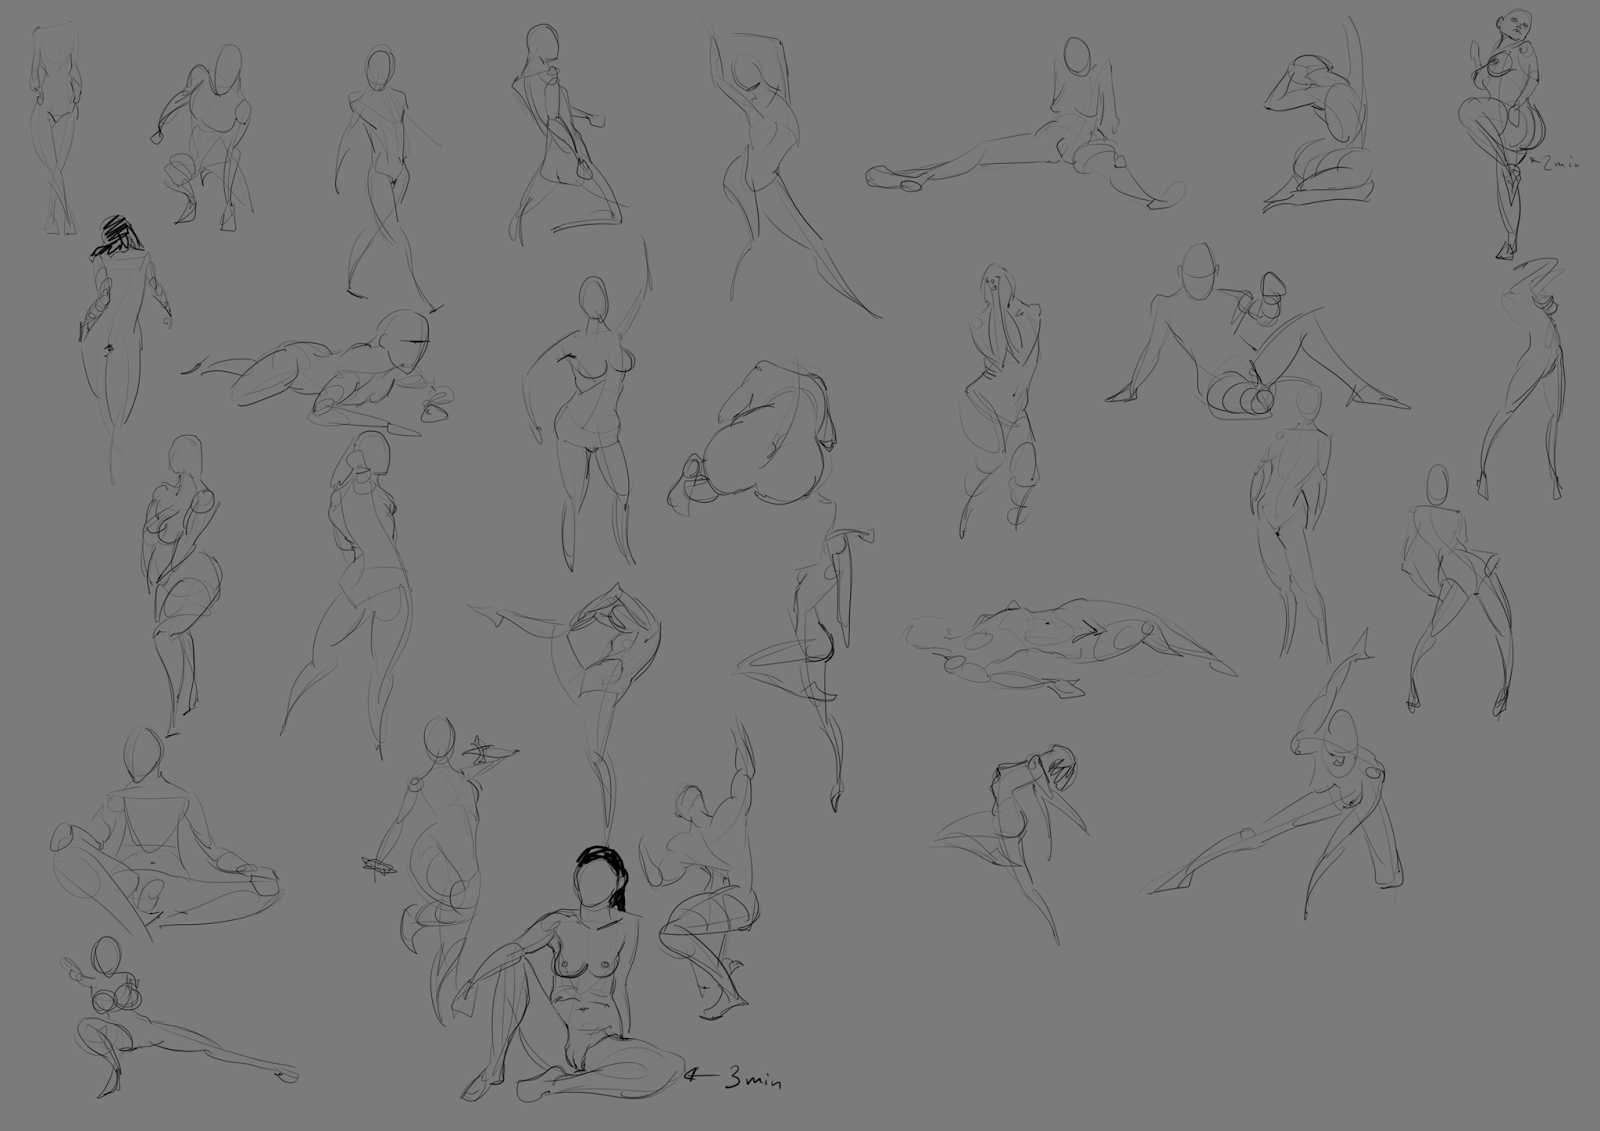 XaB au travail ! [nudity inside] - Page 14 SpeedStudies_2016-11-09-posture-hampton-1